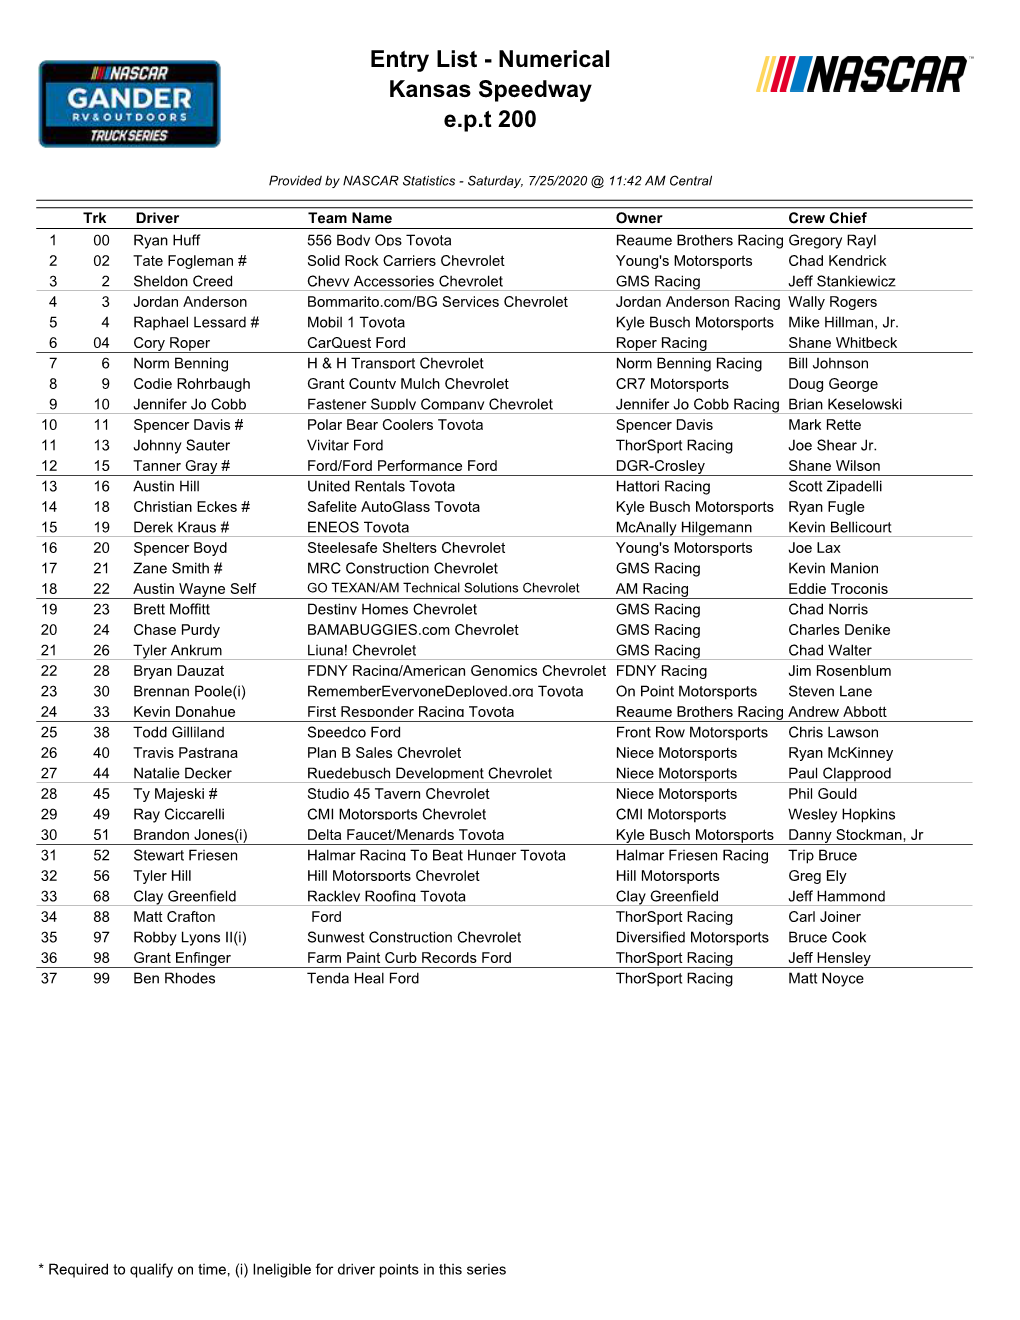 Entry List - Numerical Kansas Speedway E.P.T 200